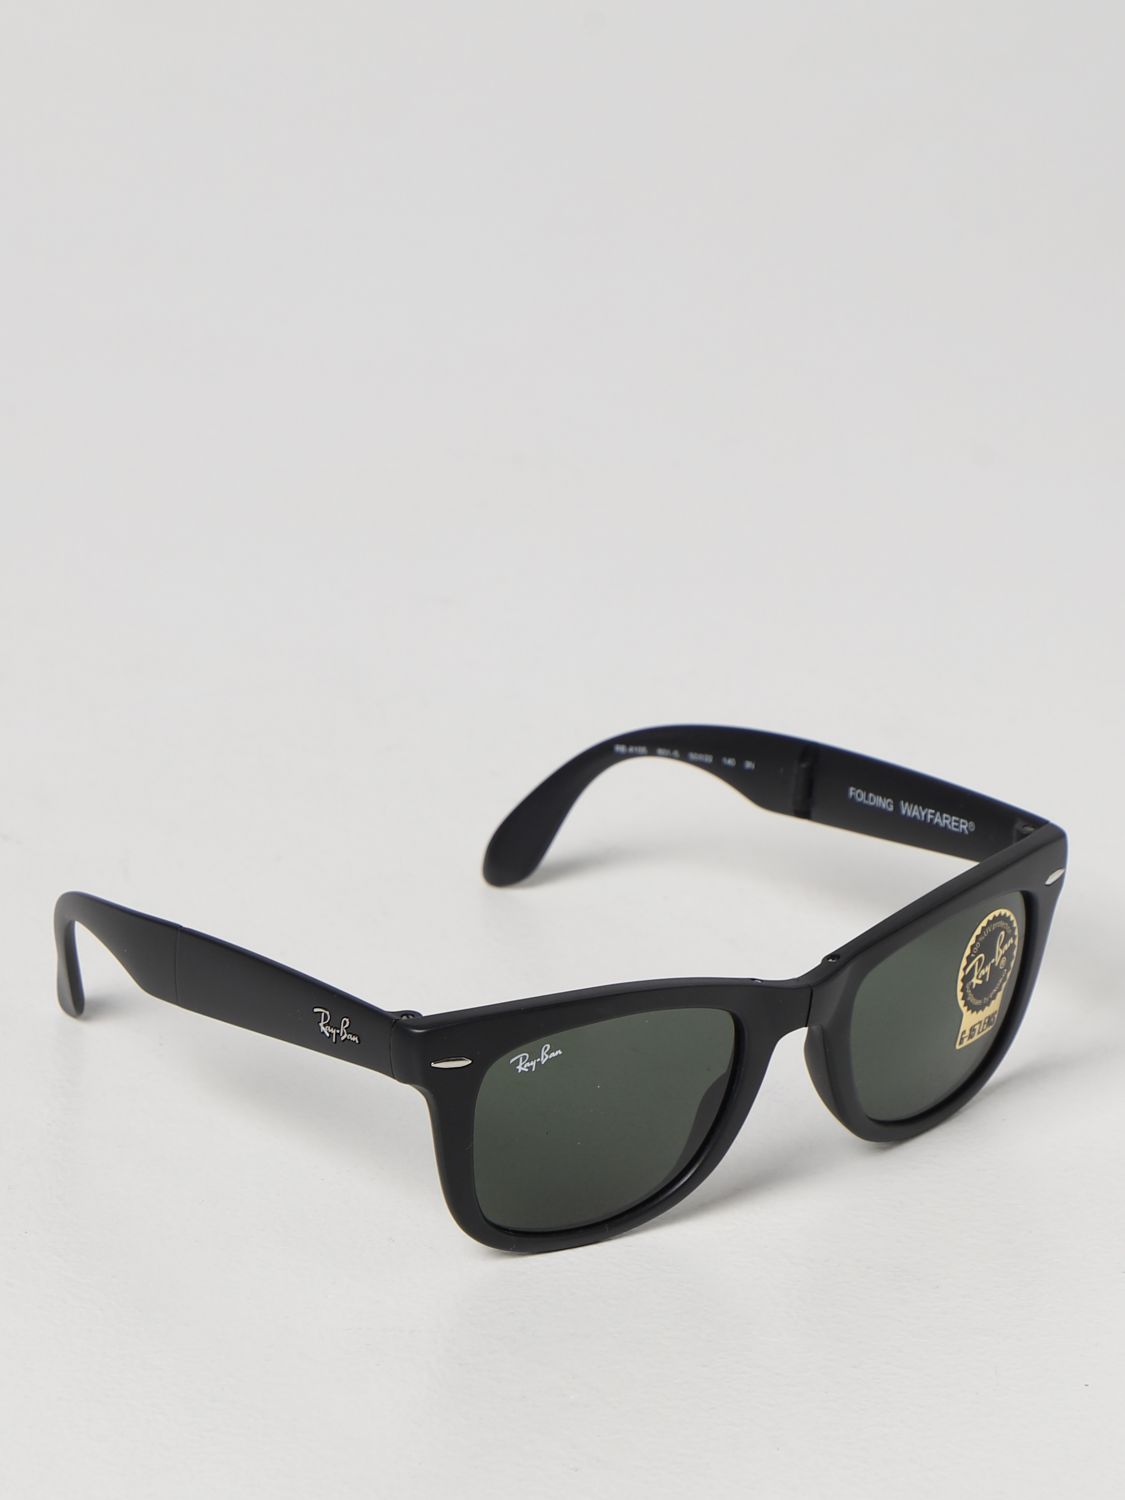 Ray-Ban Ray-Ban Folding Wayfarer sunglasses in acetate